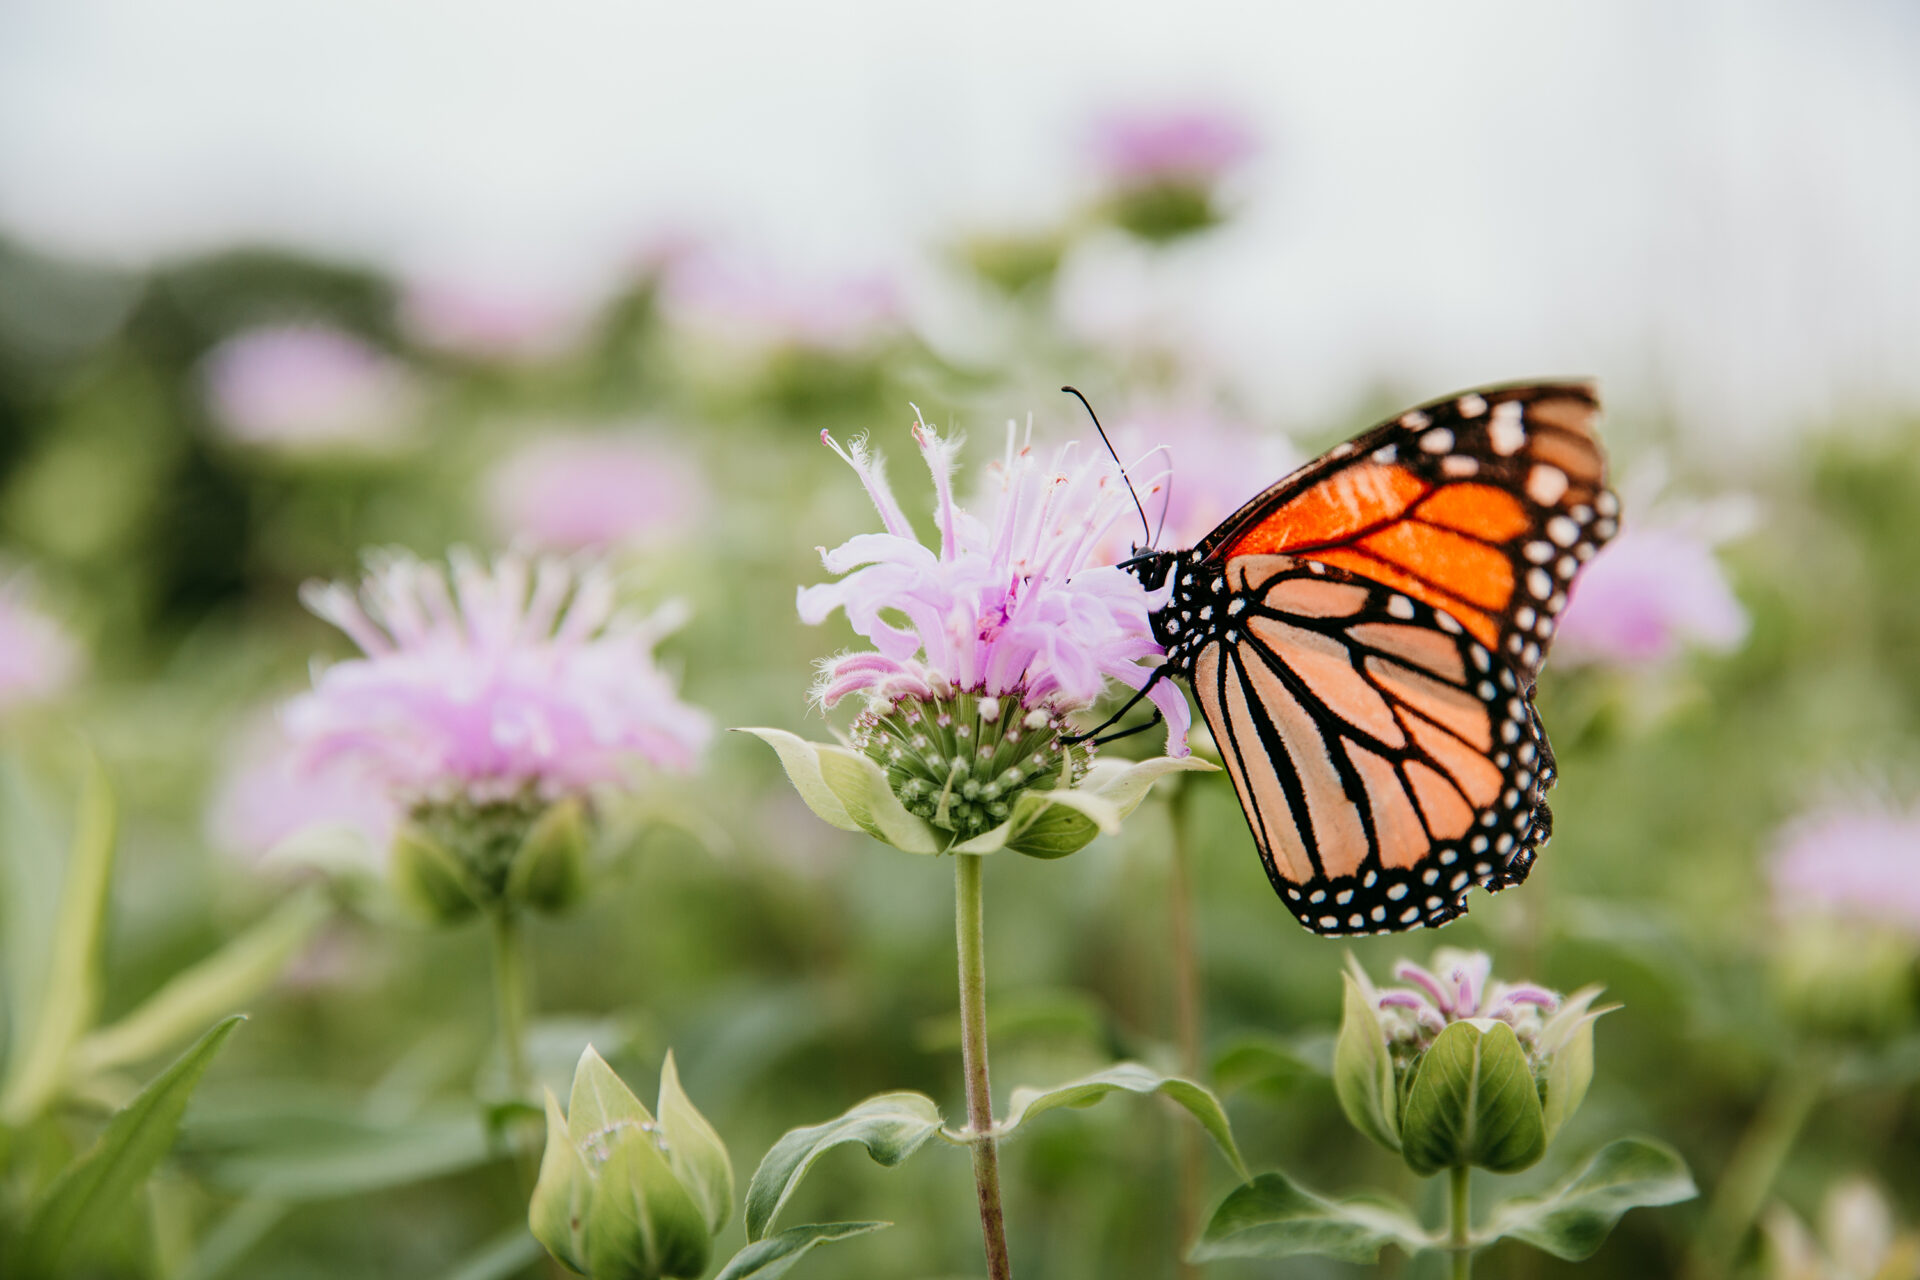 Monarch on Pollinator